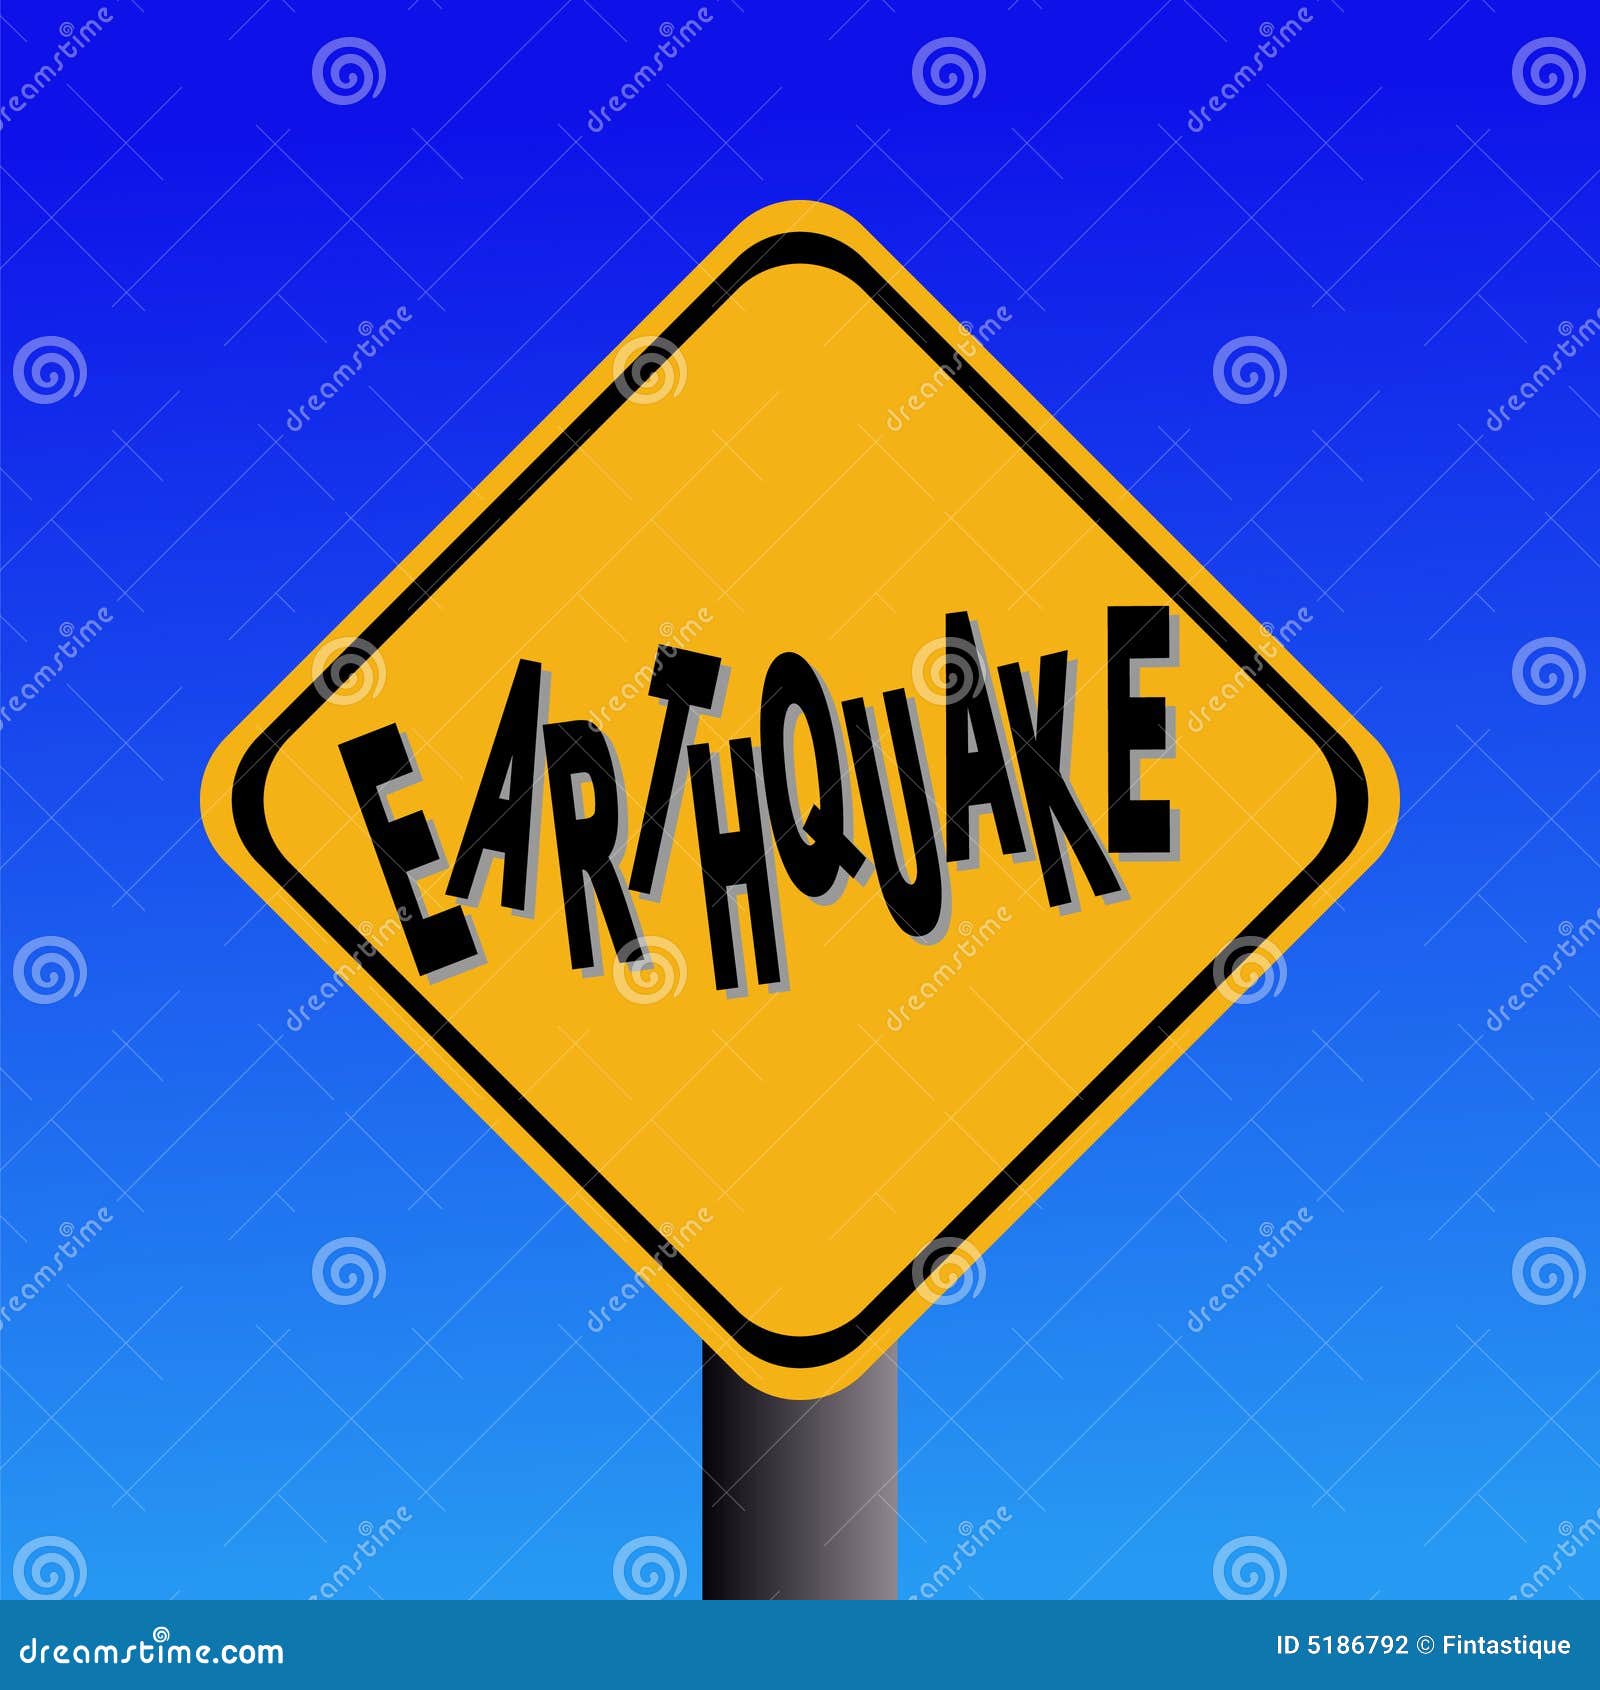 Earthquake hazard sign stock vector. Illustration of disaster - 5186792